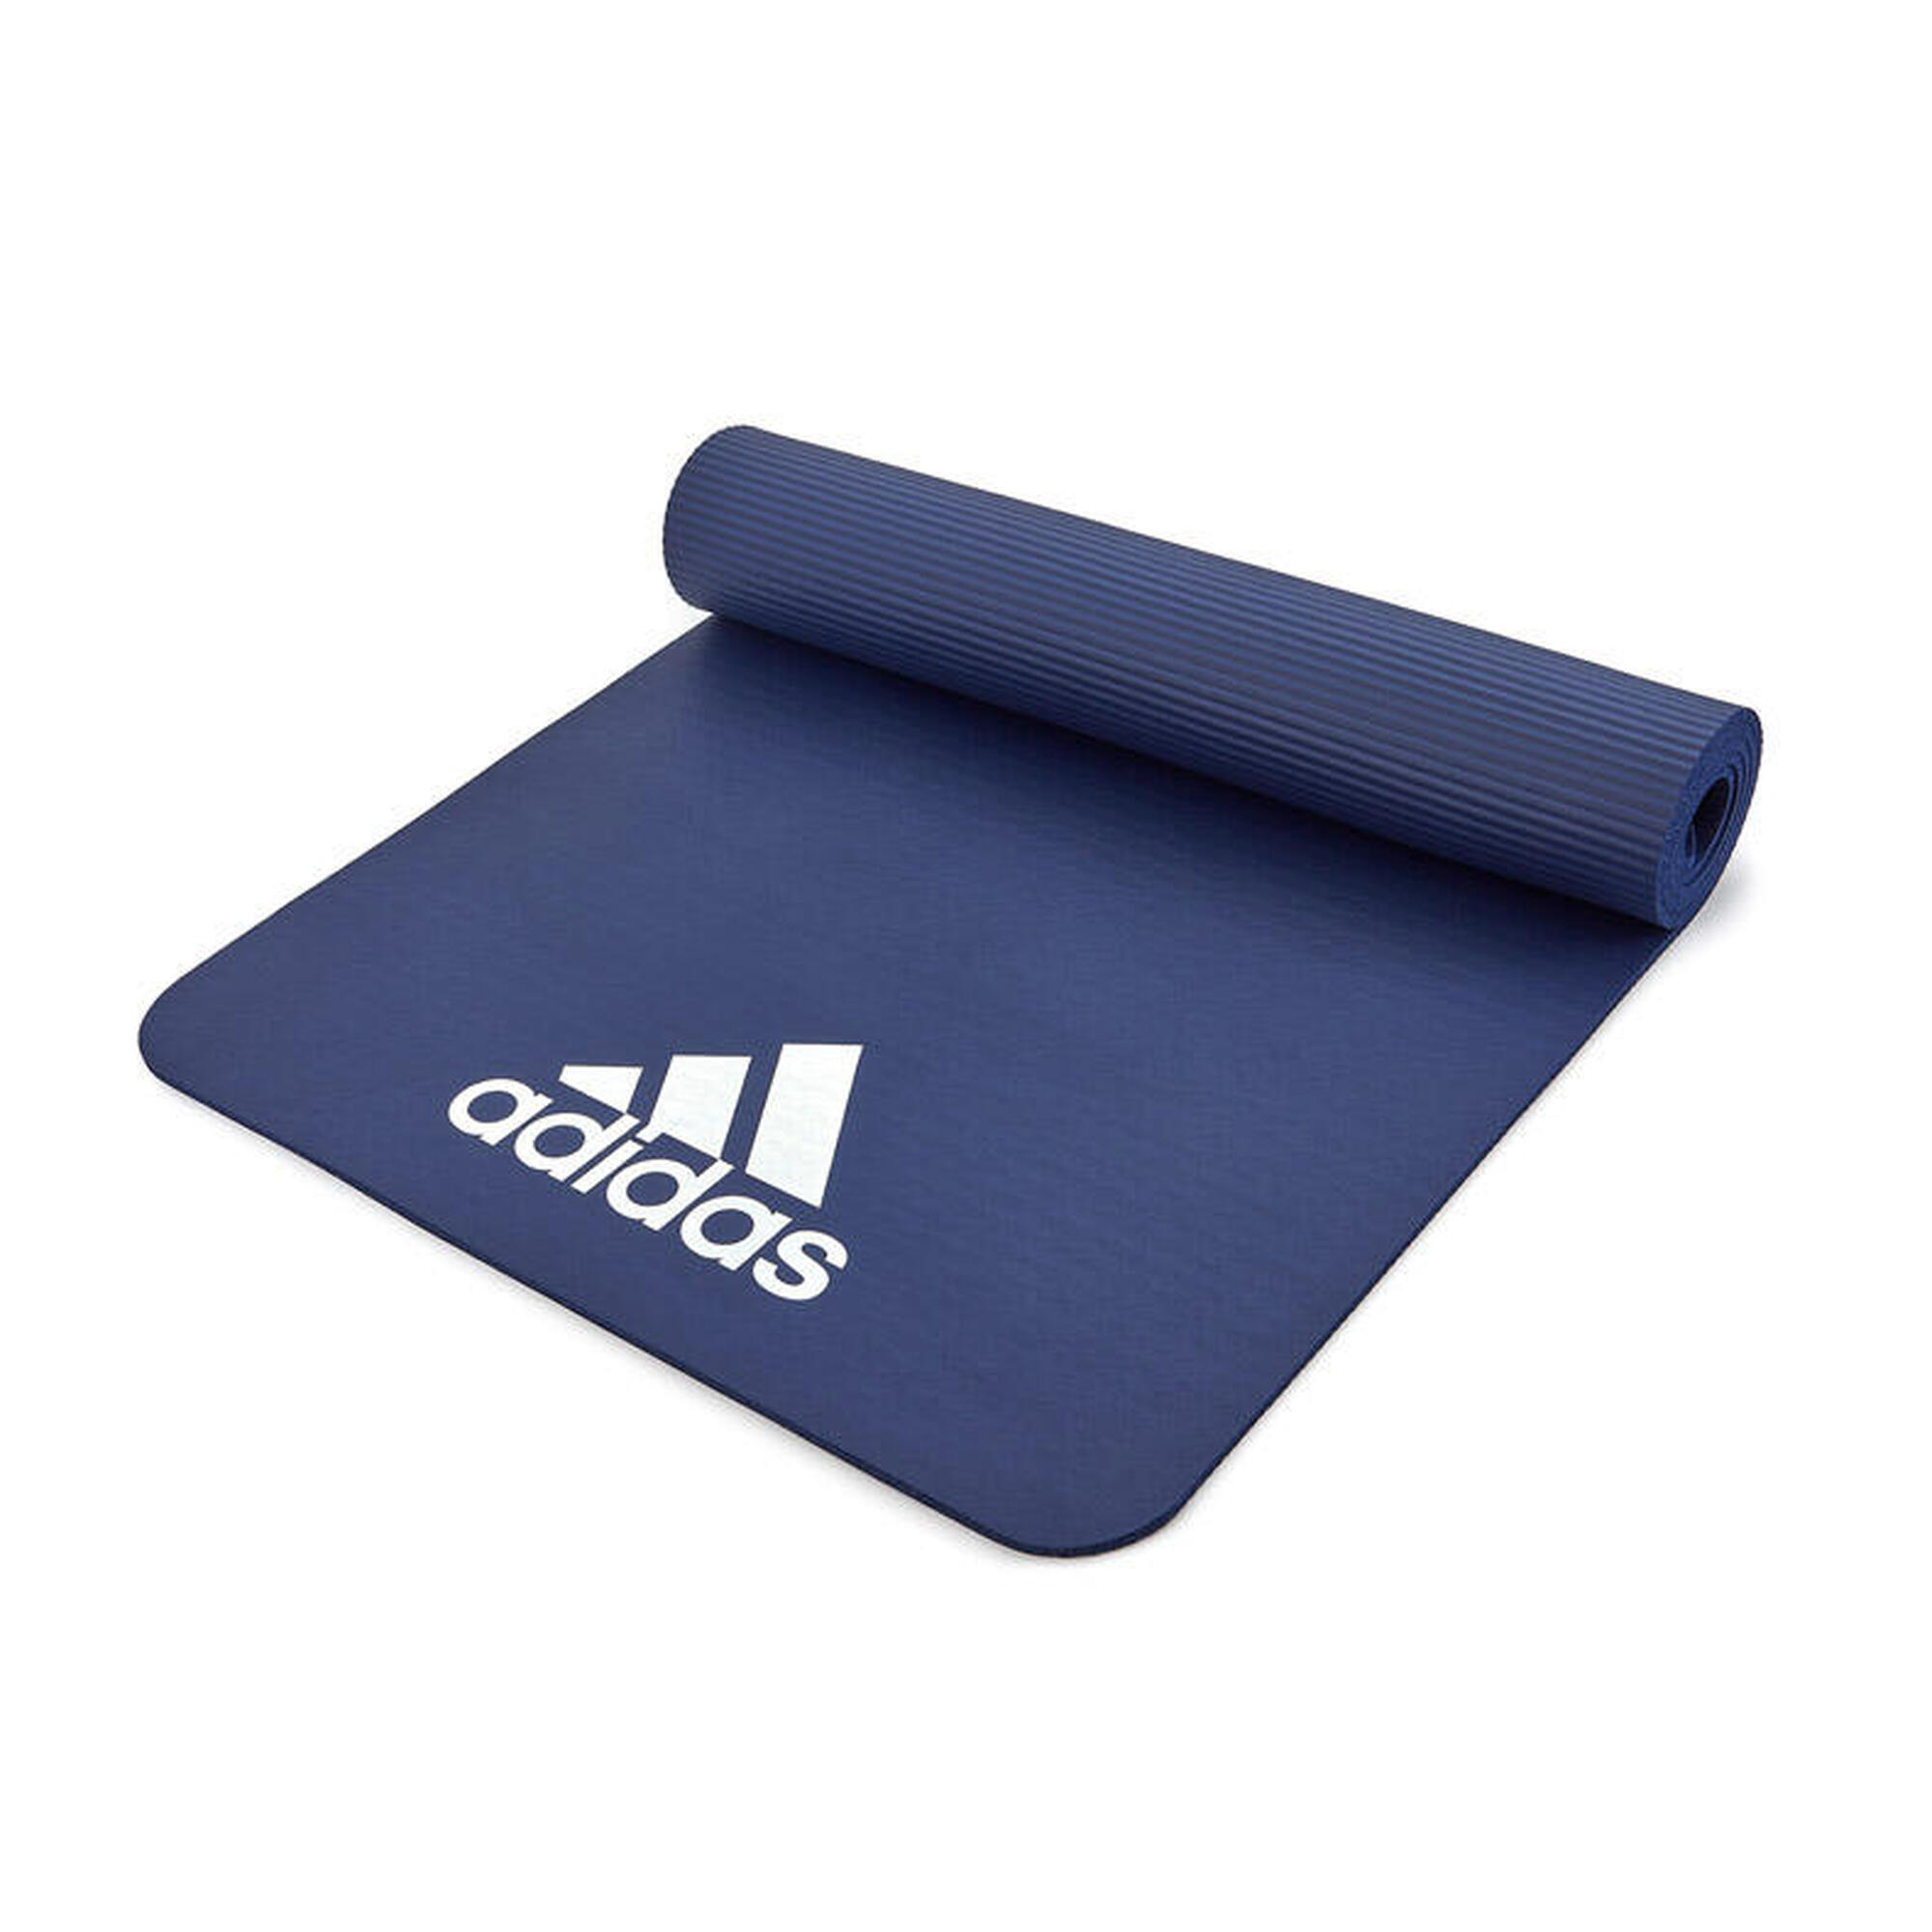 Esterilla de fitness Adidas - 7mm - Azul